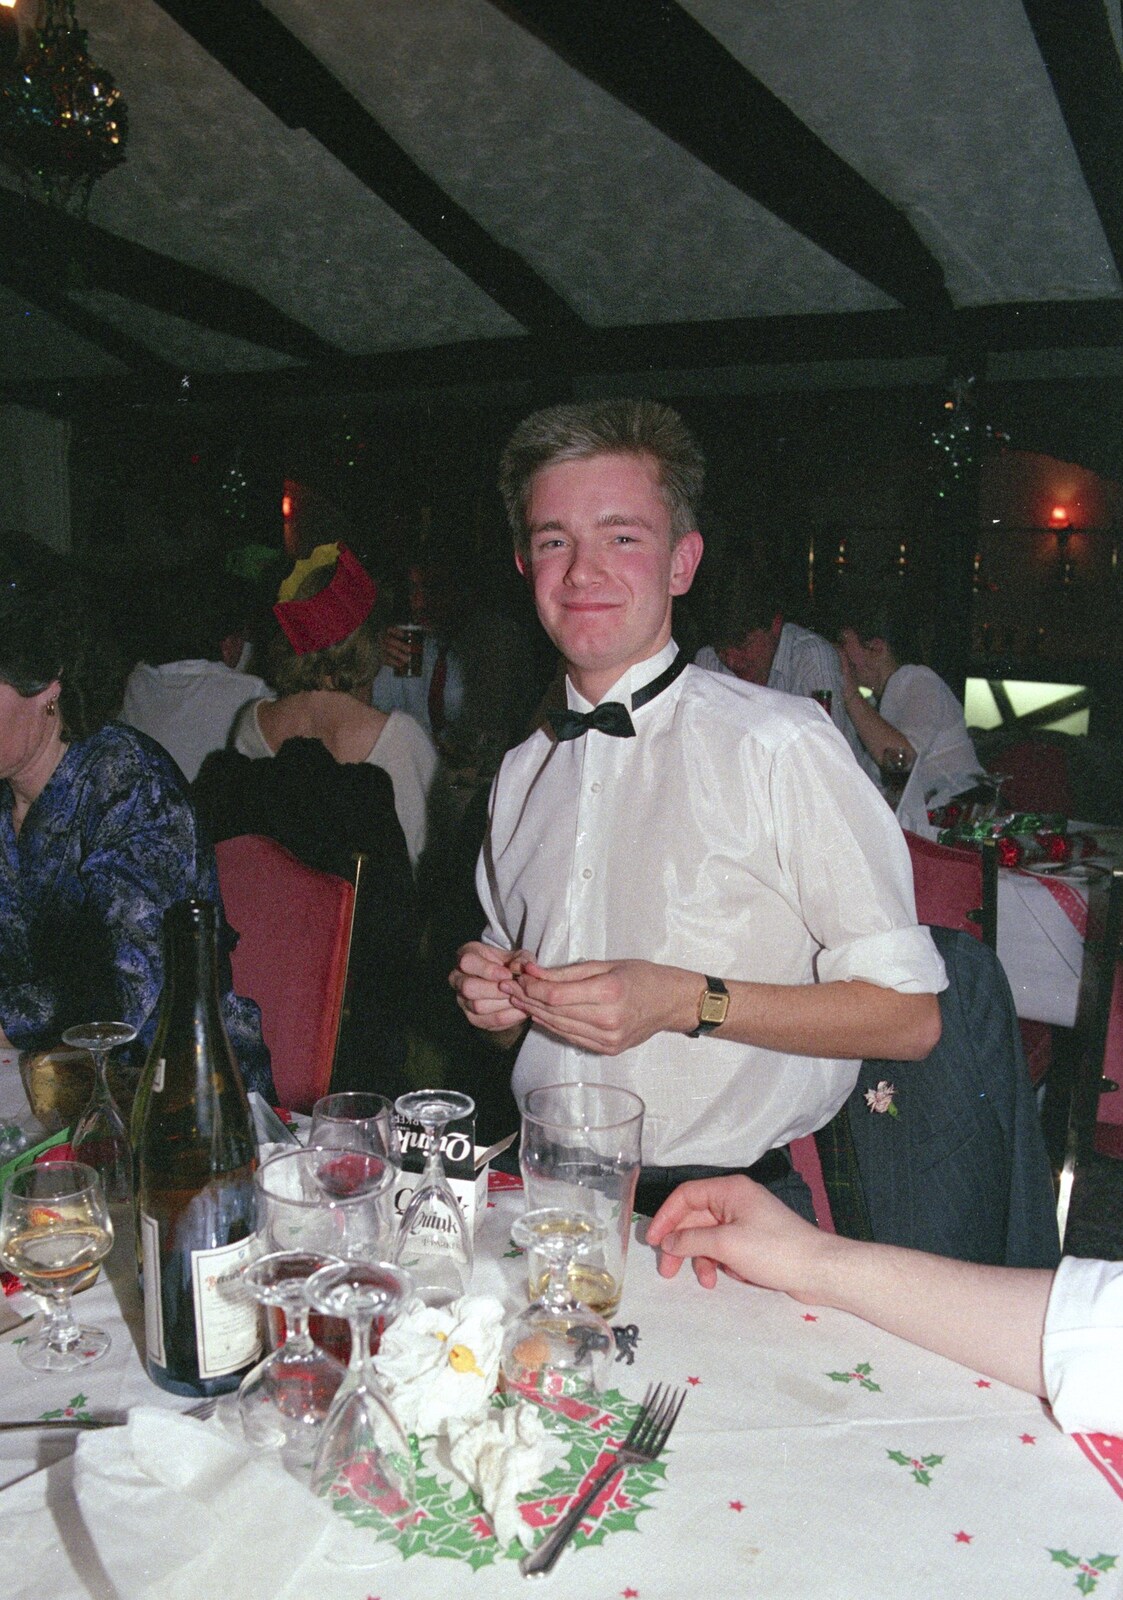 Nosher in a bow tie from Printec's Christmas Dinner, Harleston, Norfolk - 22nd December 1990